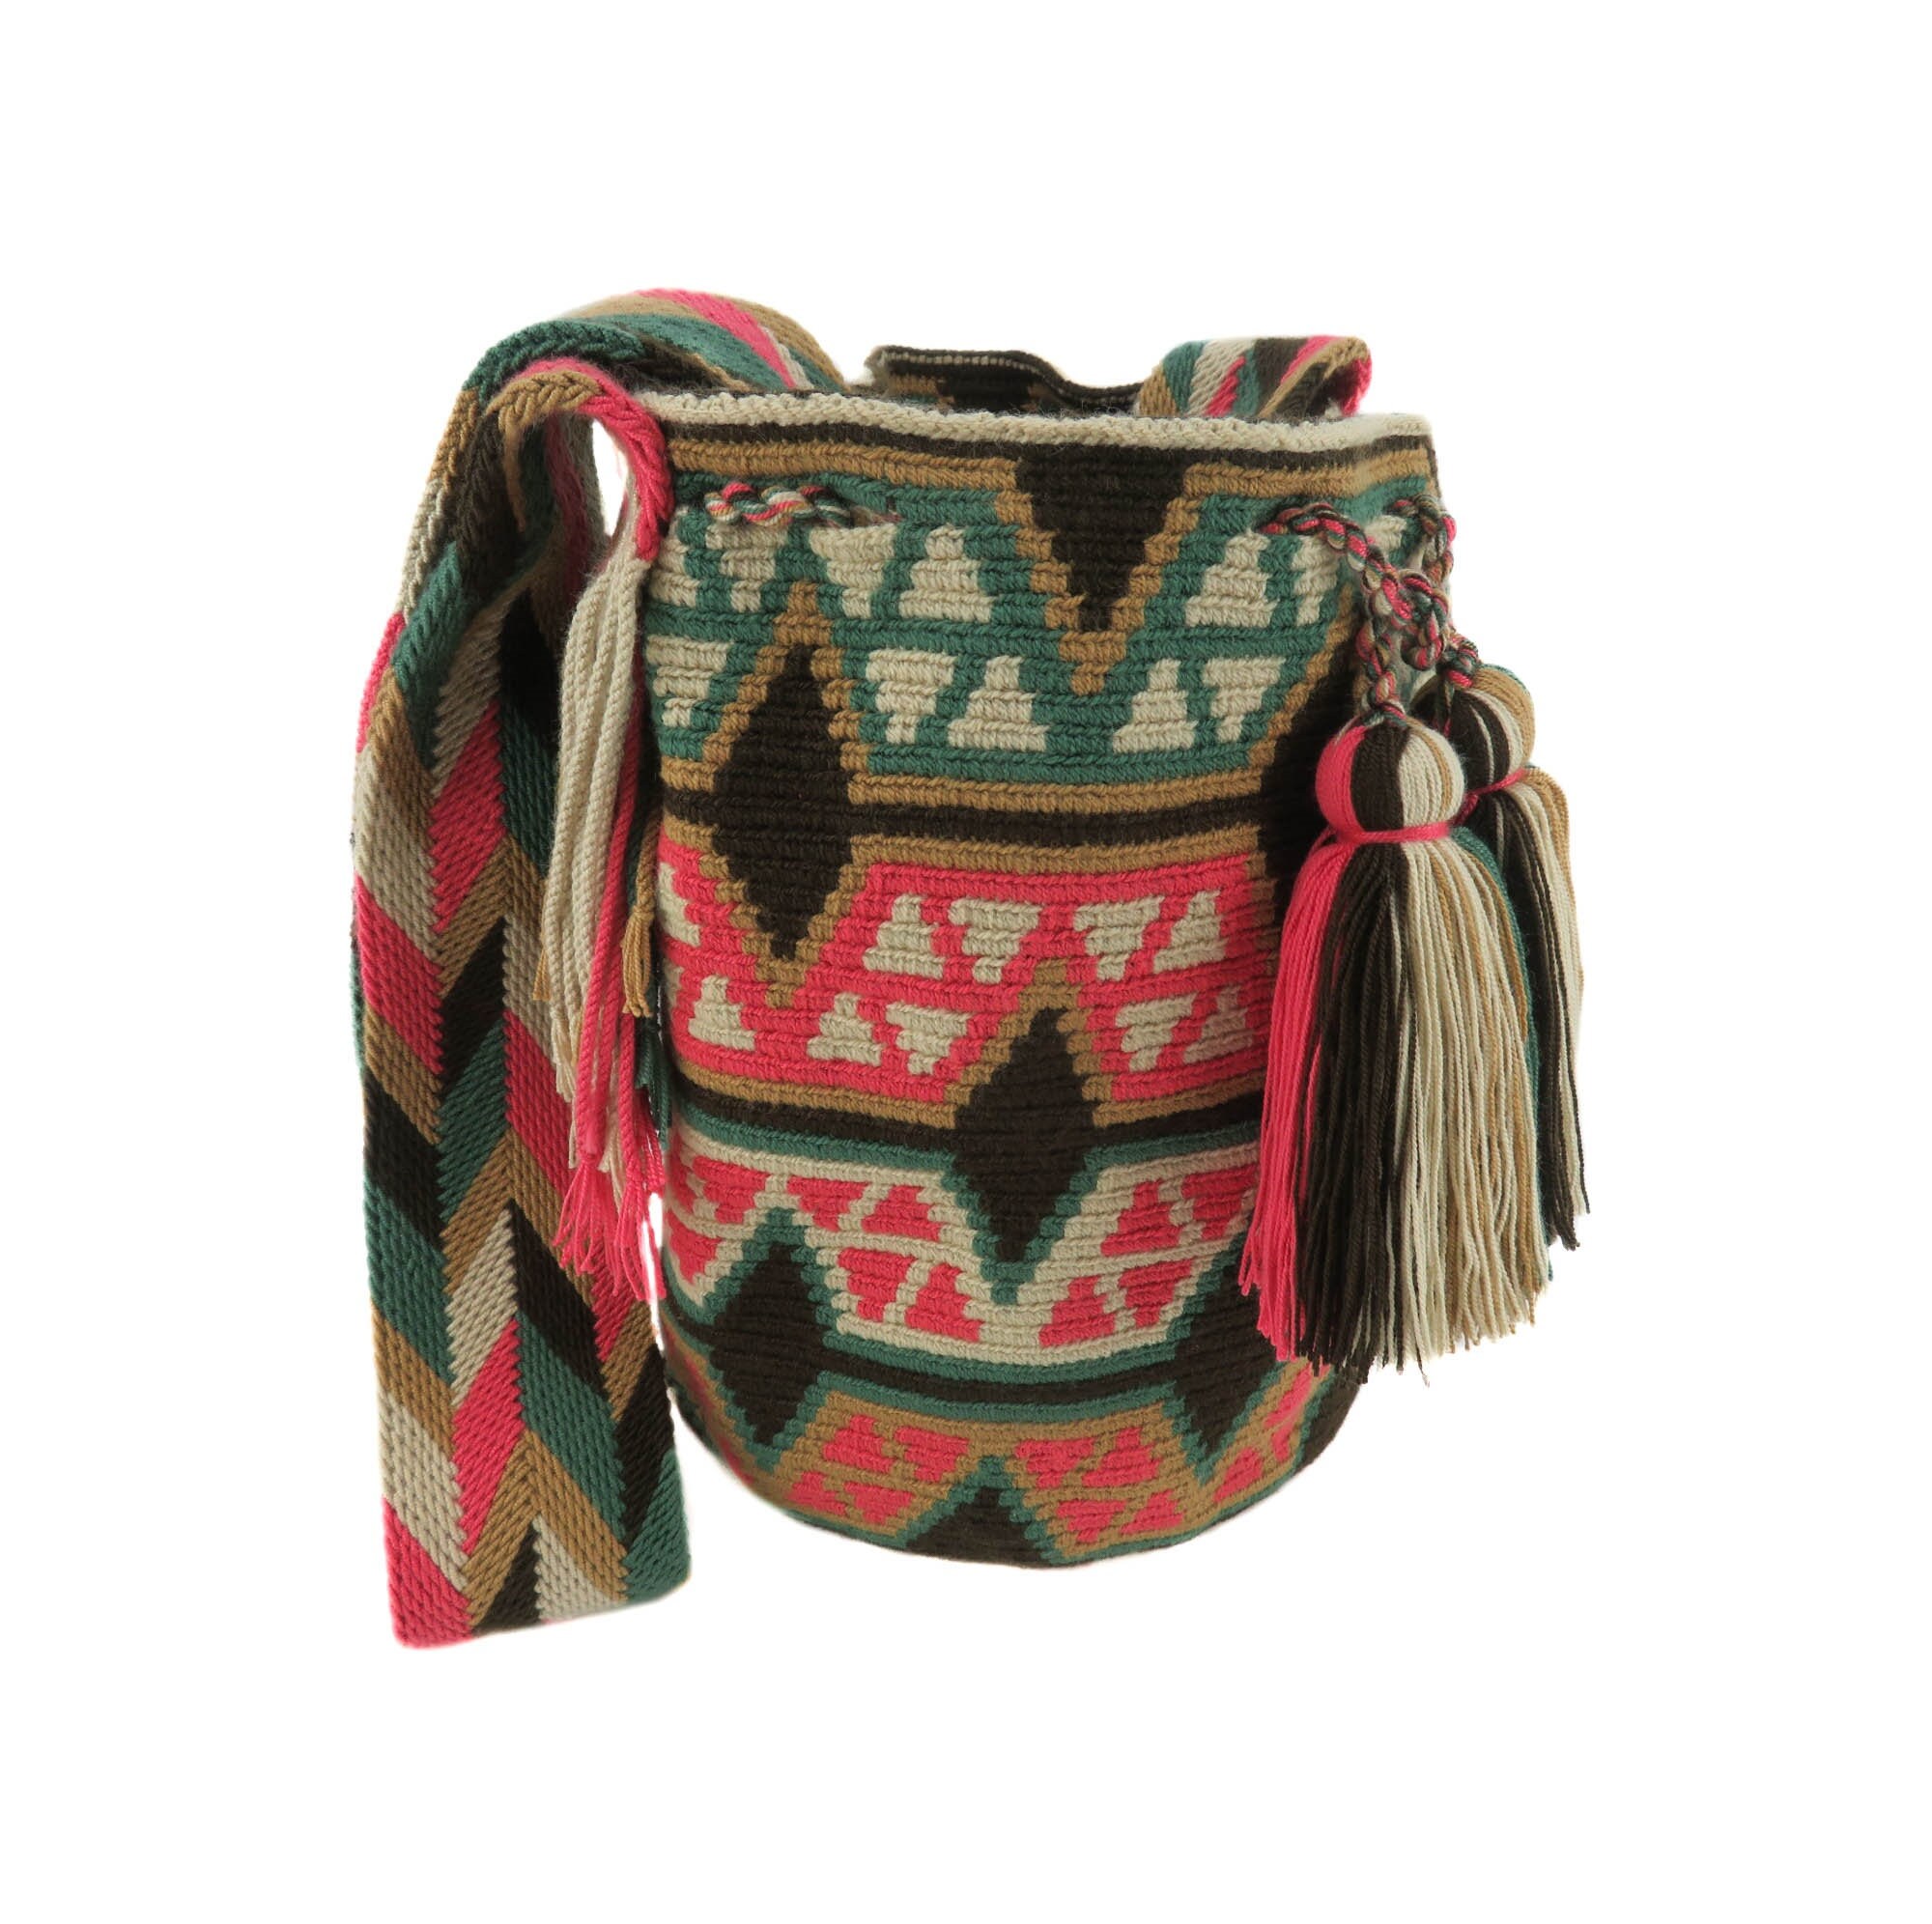 WAYUU Mochila Bag From Colombia Handmade - Denmark